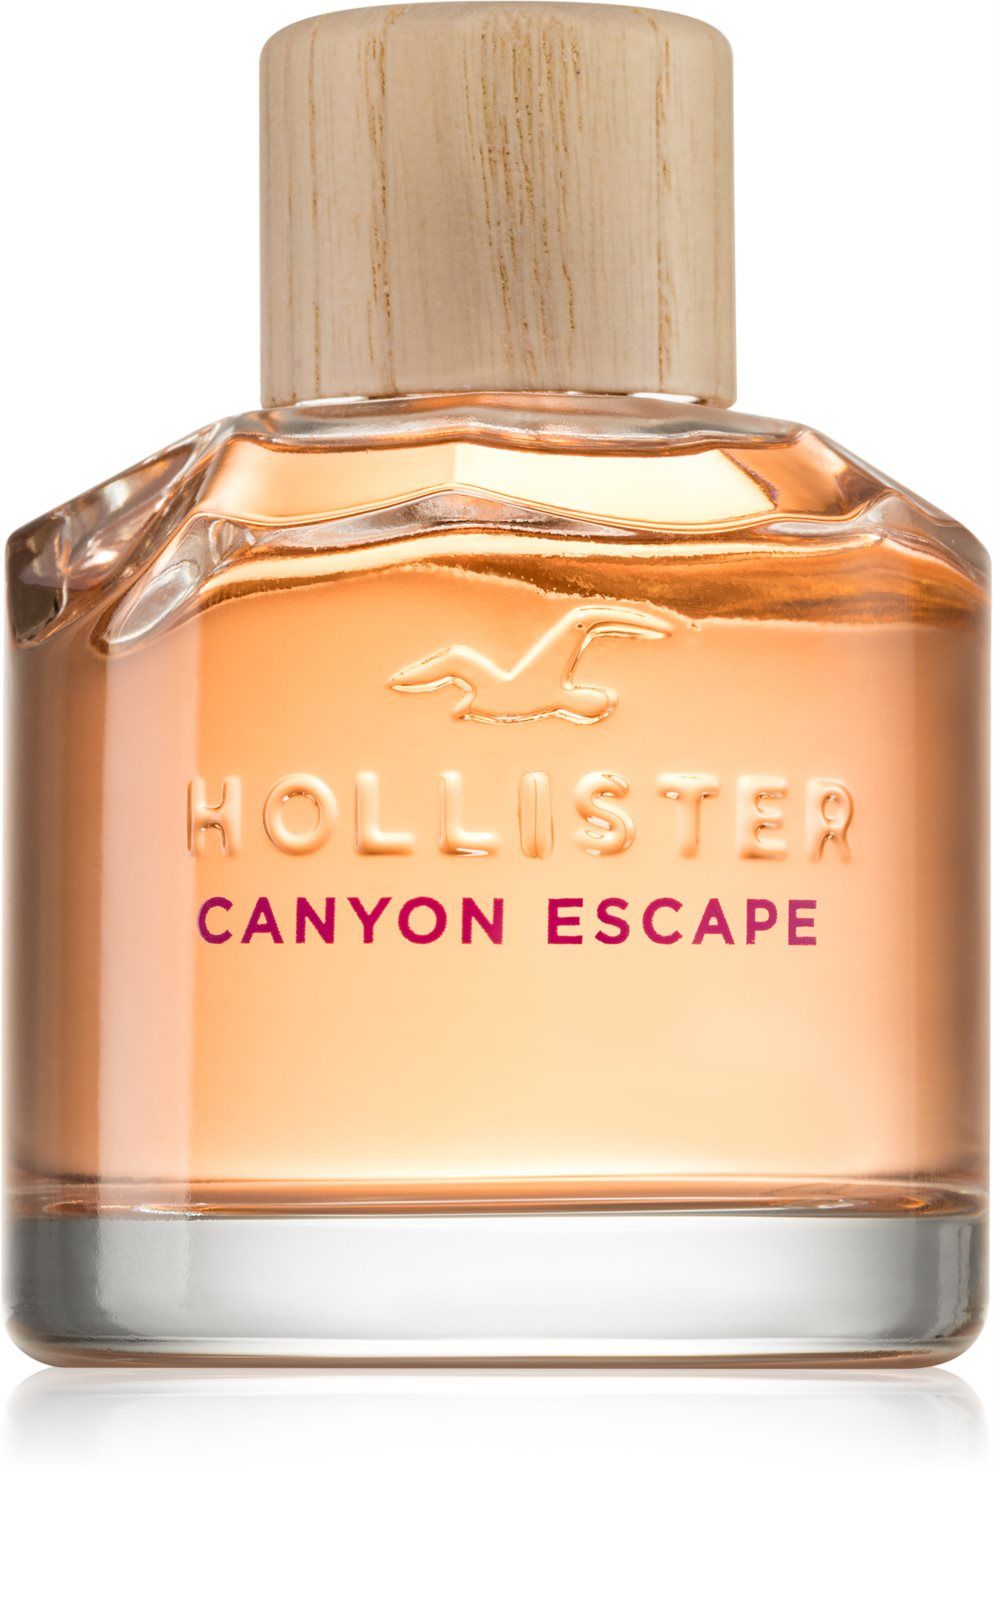 Hollister canyon escape. Духи Hollister Canyon Escape. Hollister Canyon Escape духи 100. Hollister Canyon Escape woman тестер. Одеколон Hollister Canyon Rush.